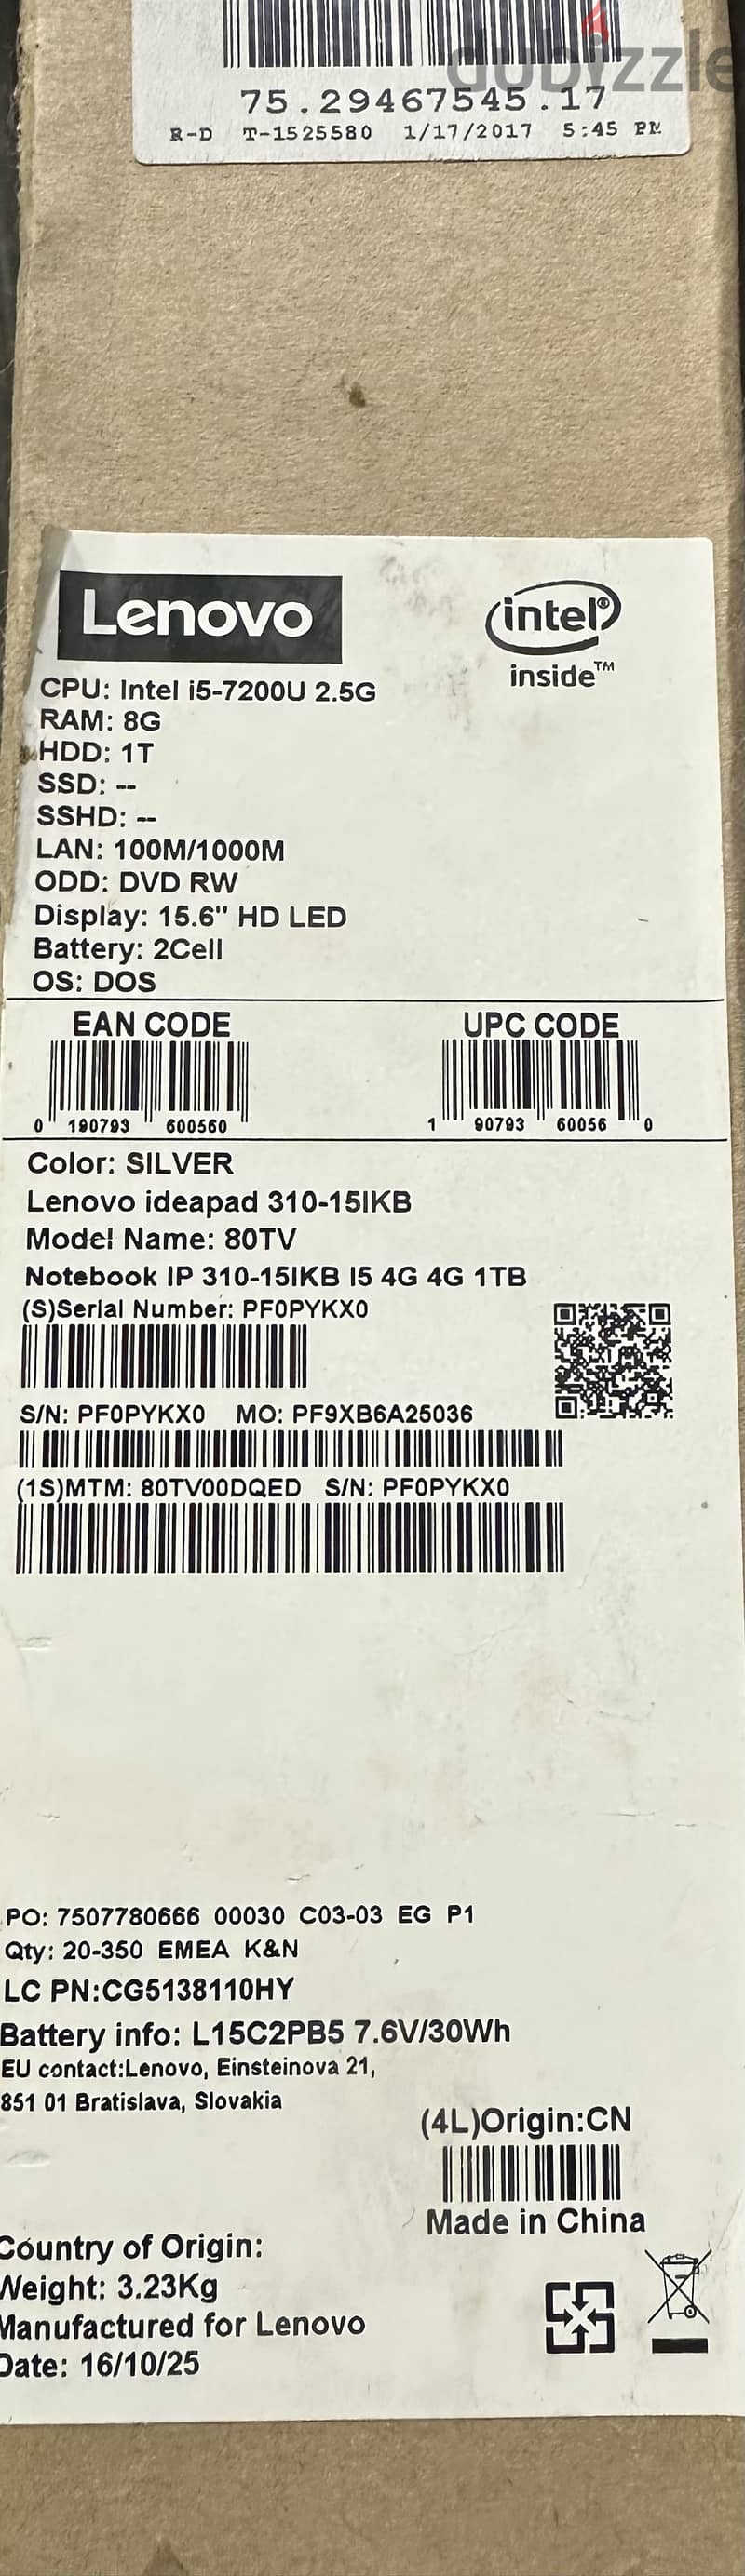 Lenovo ideapad 310 -8g Ram - 1T - intel i5 4